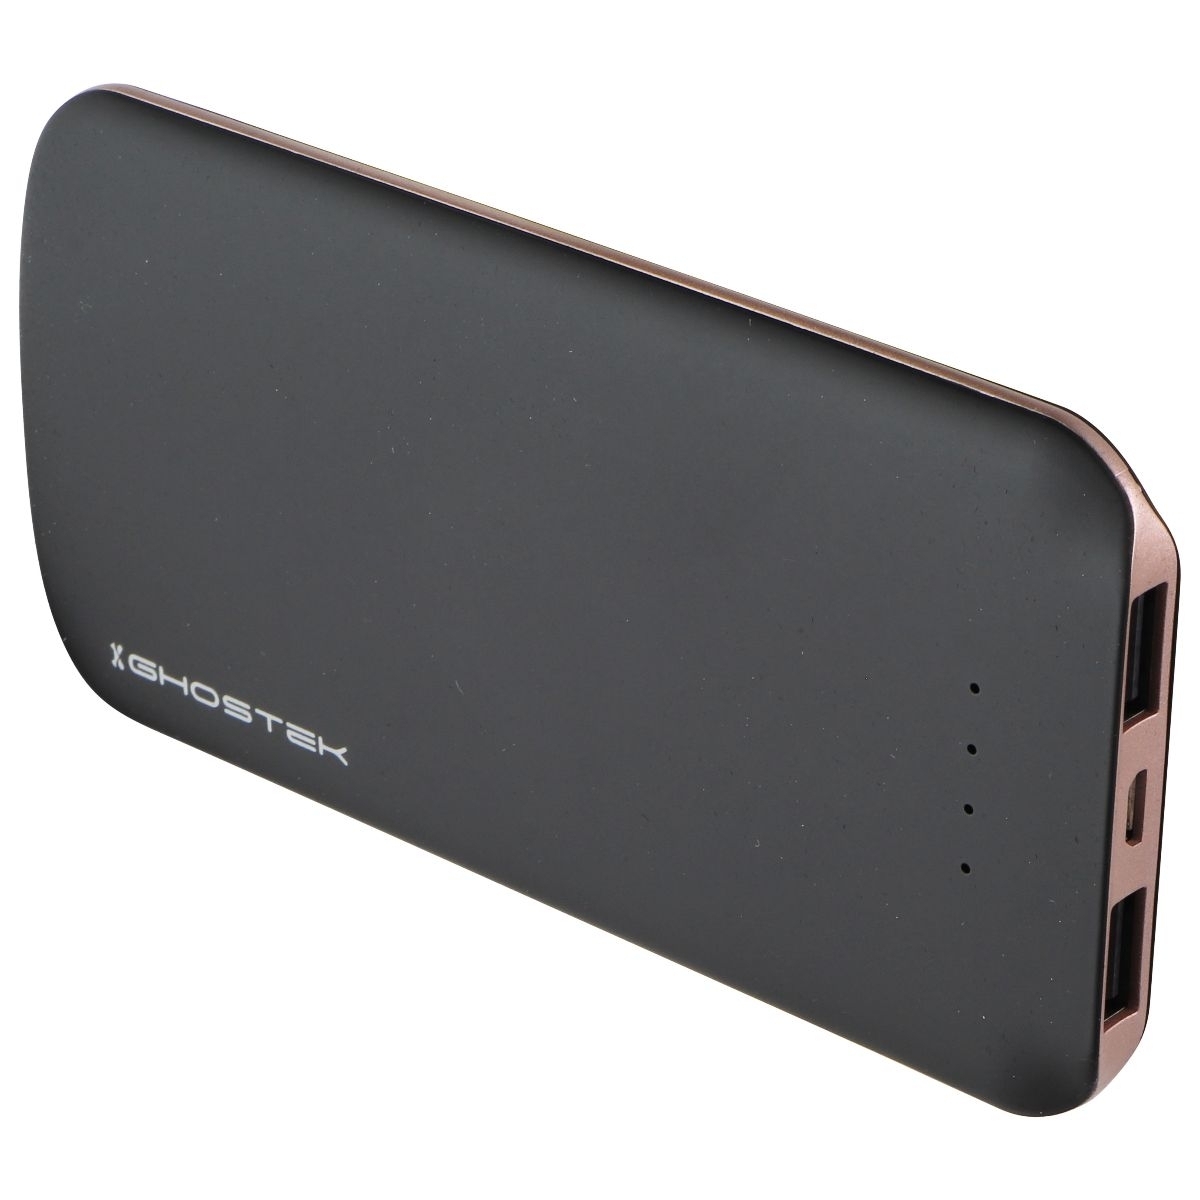 Ghostek Life NRGpak (5,000mAh) Portable Dual USB Power Bank - Black/Rose